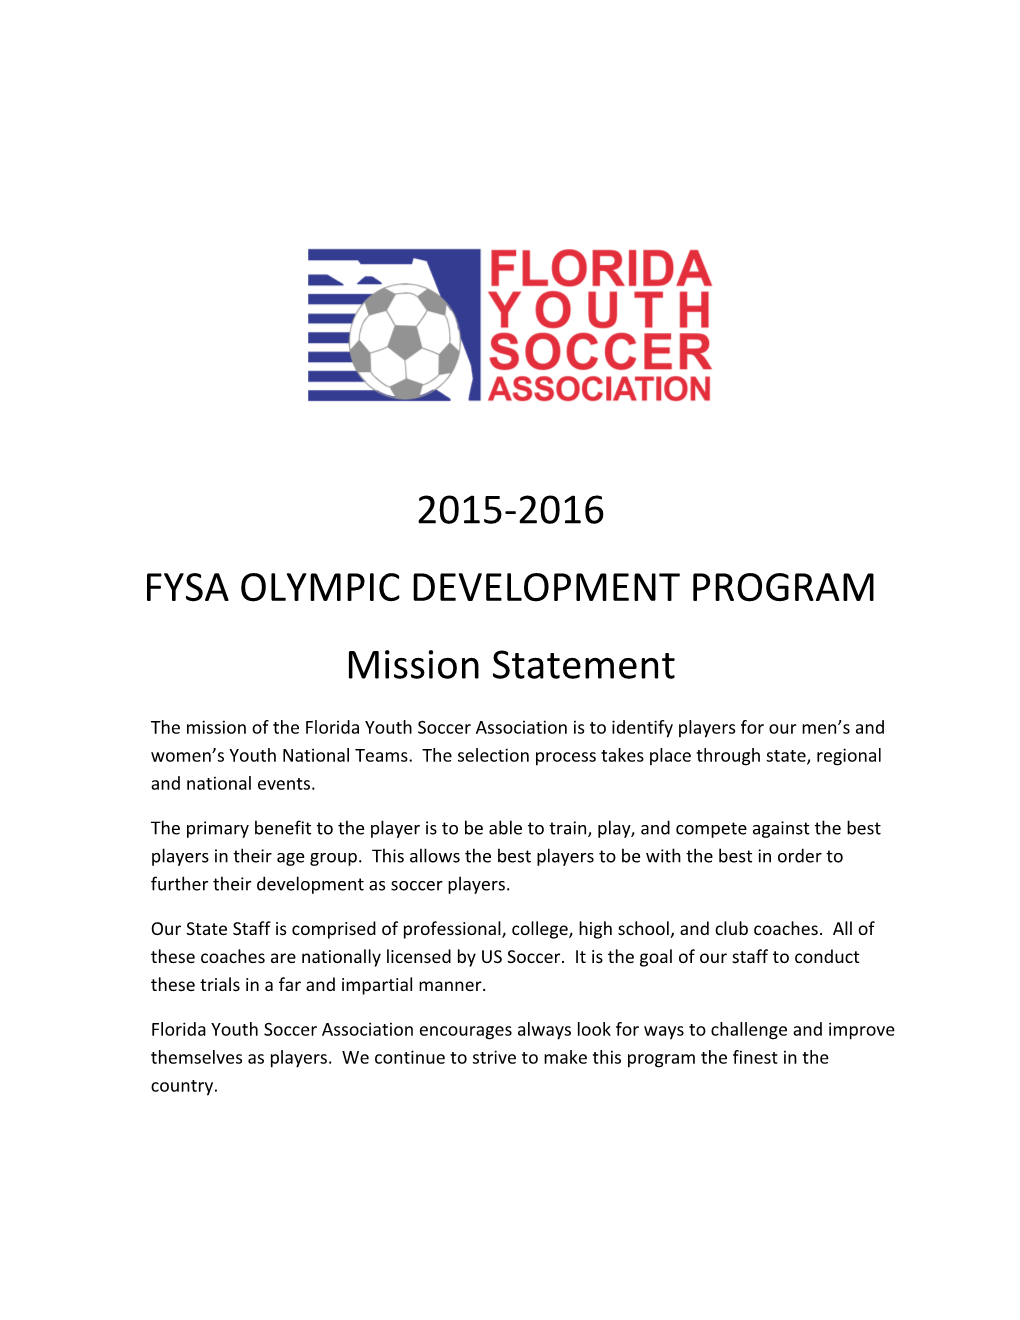 Fysa Olympic Development Program